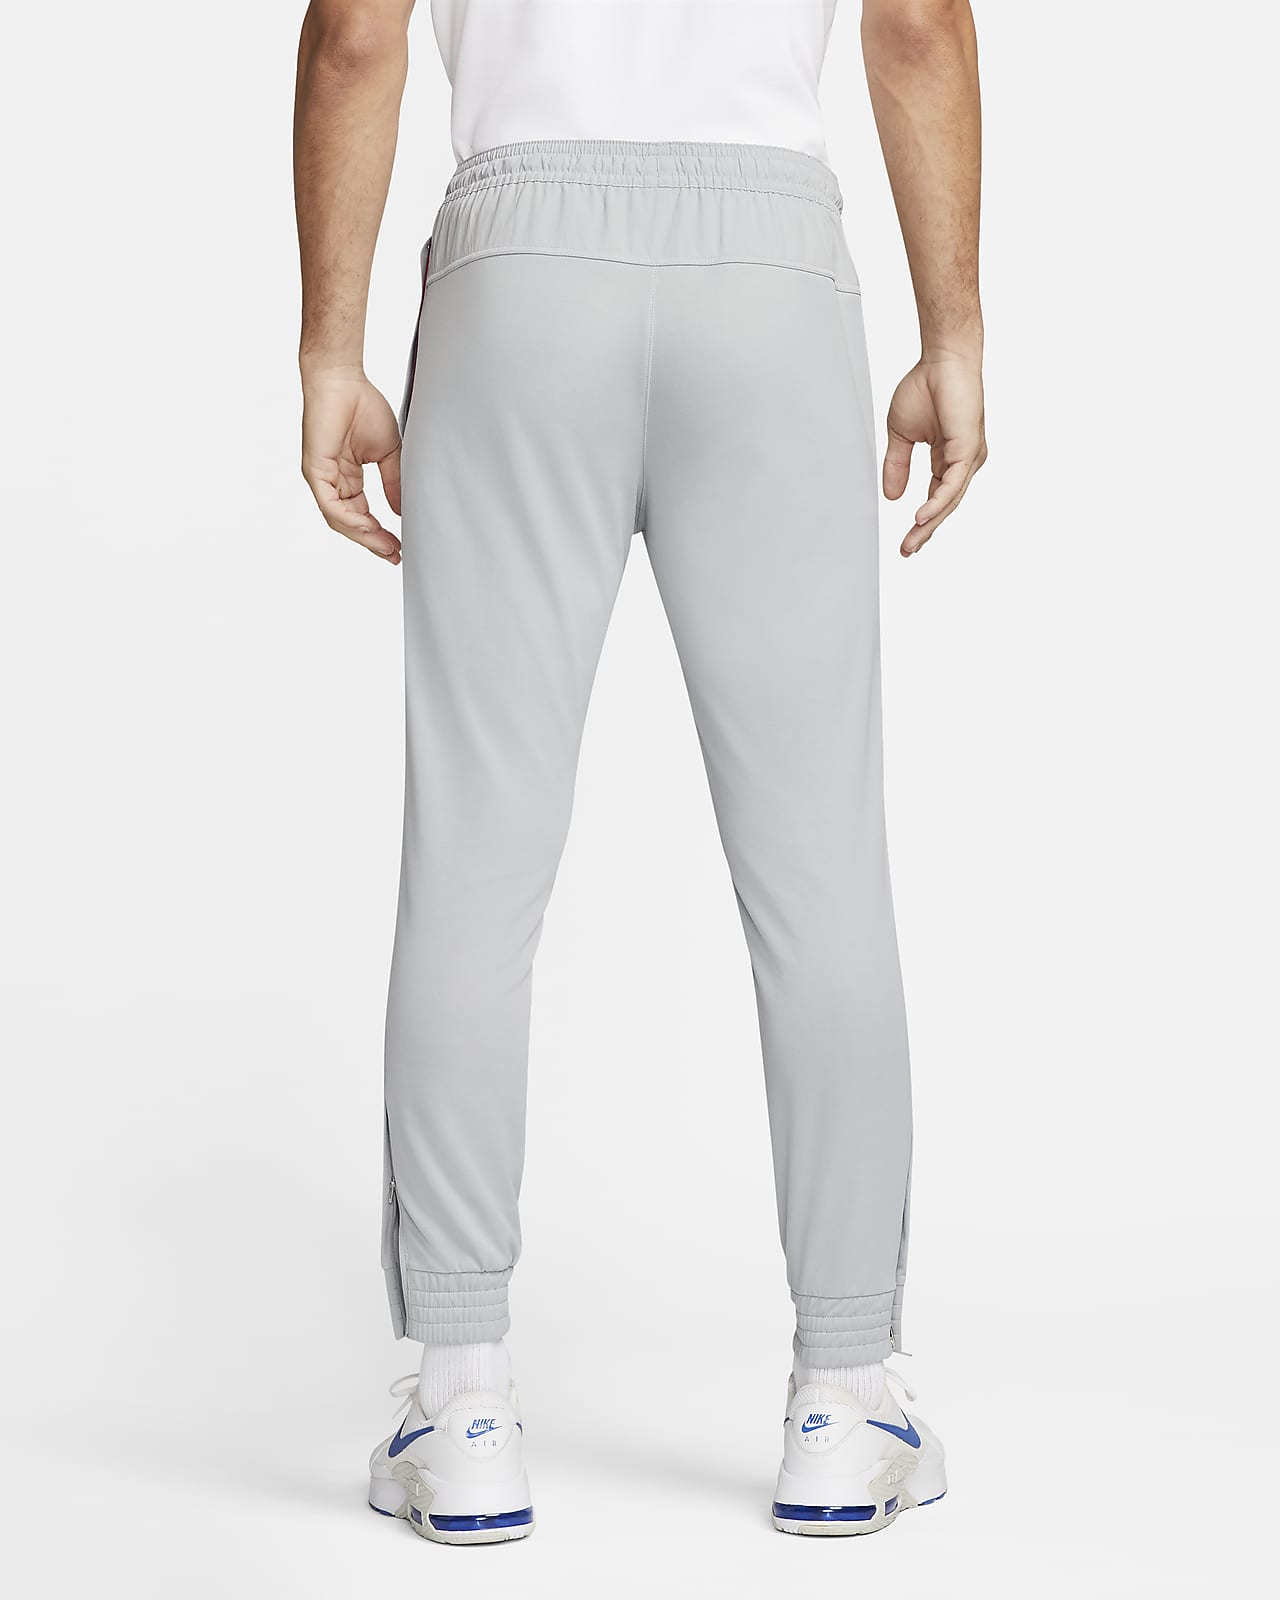 U.S. Men's Pants. Nike.com